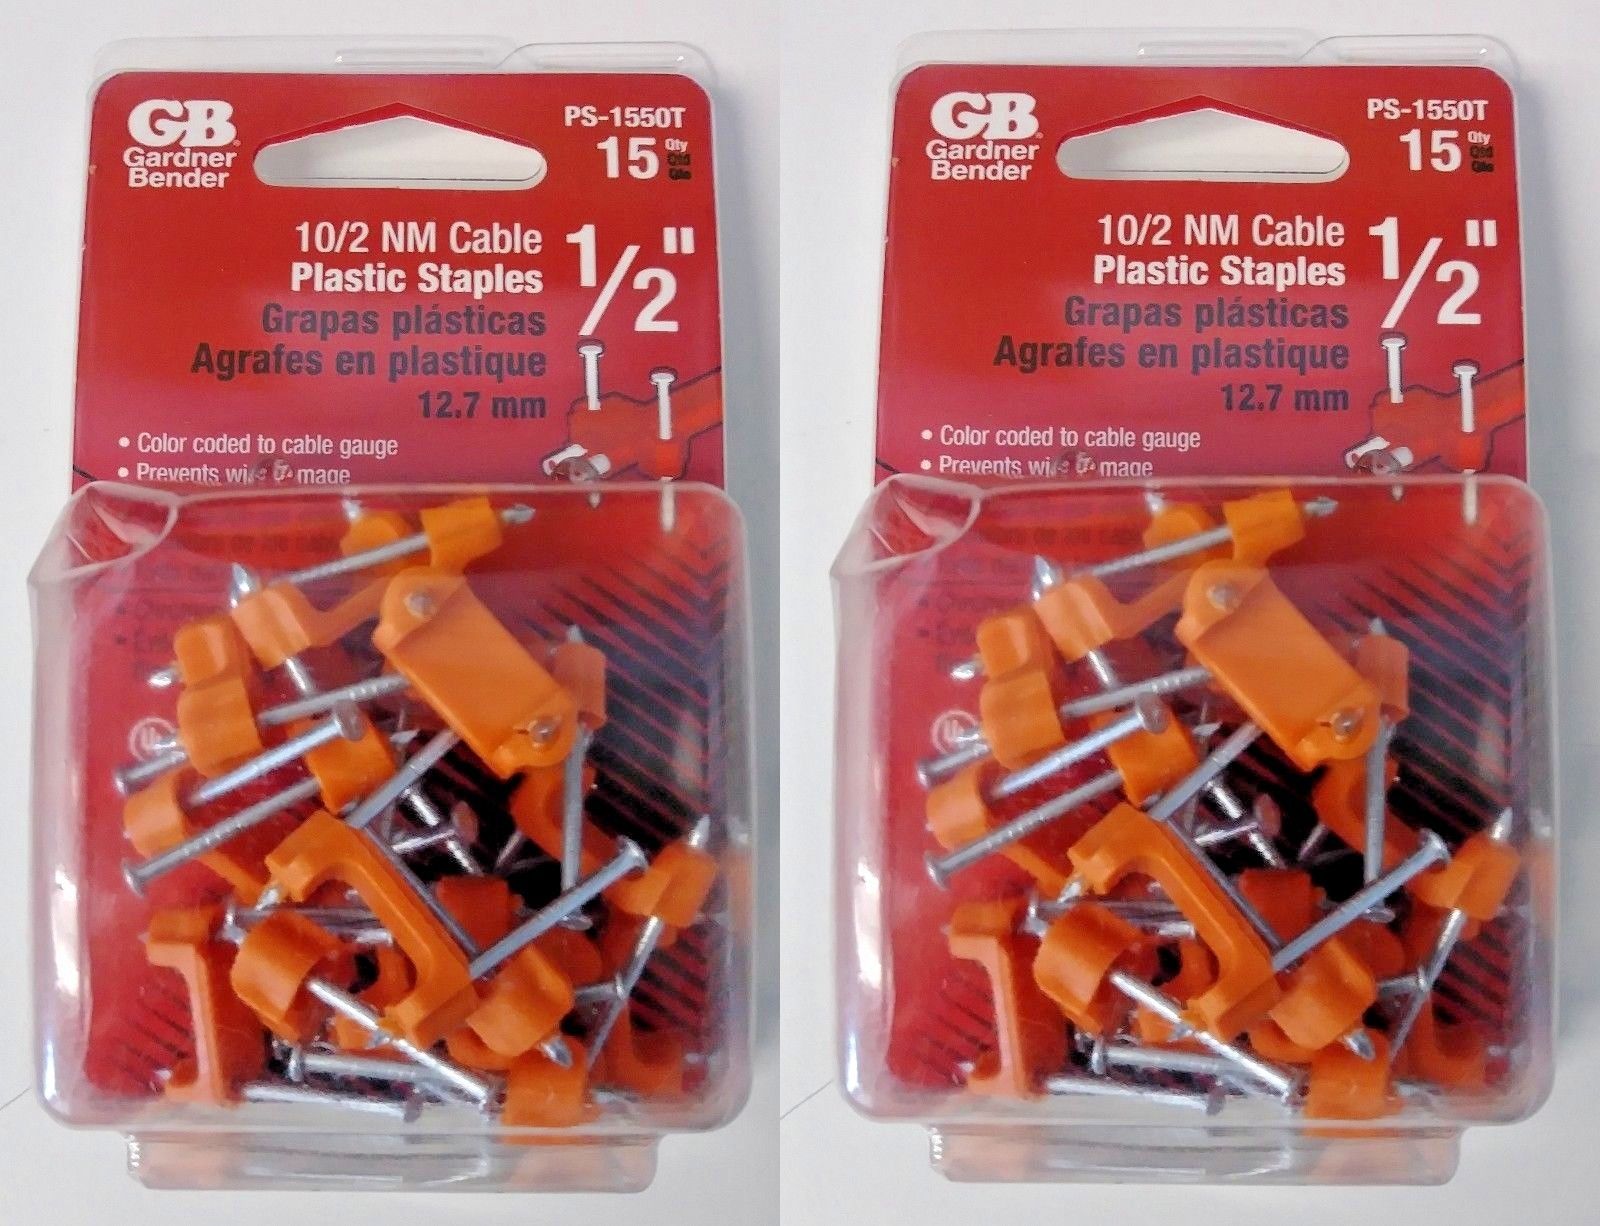 Gardner Bender PS-1550T 1/2" 10/2 NM Cable Plastic Staples USA (2 Packs of 15)